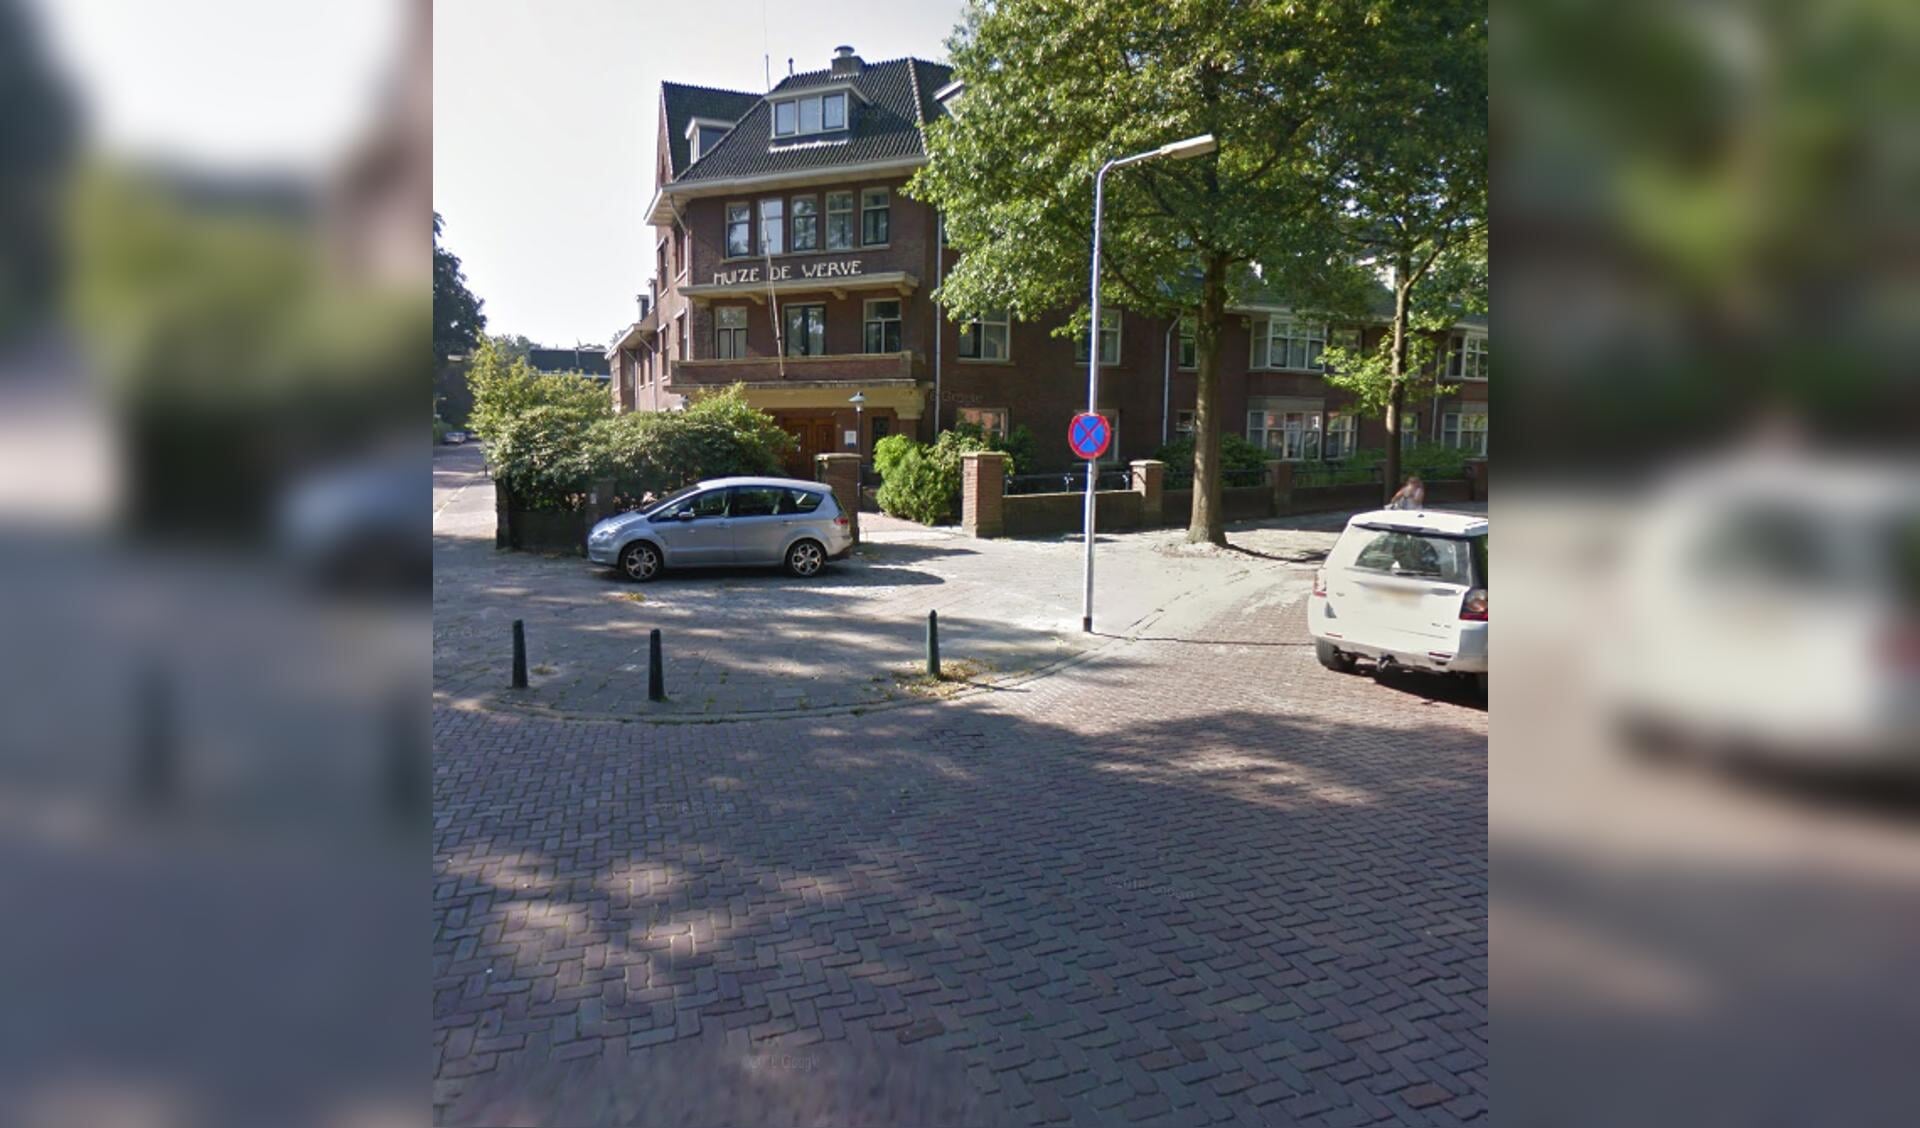 Zorgkruispunt De Werve in Breda